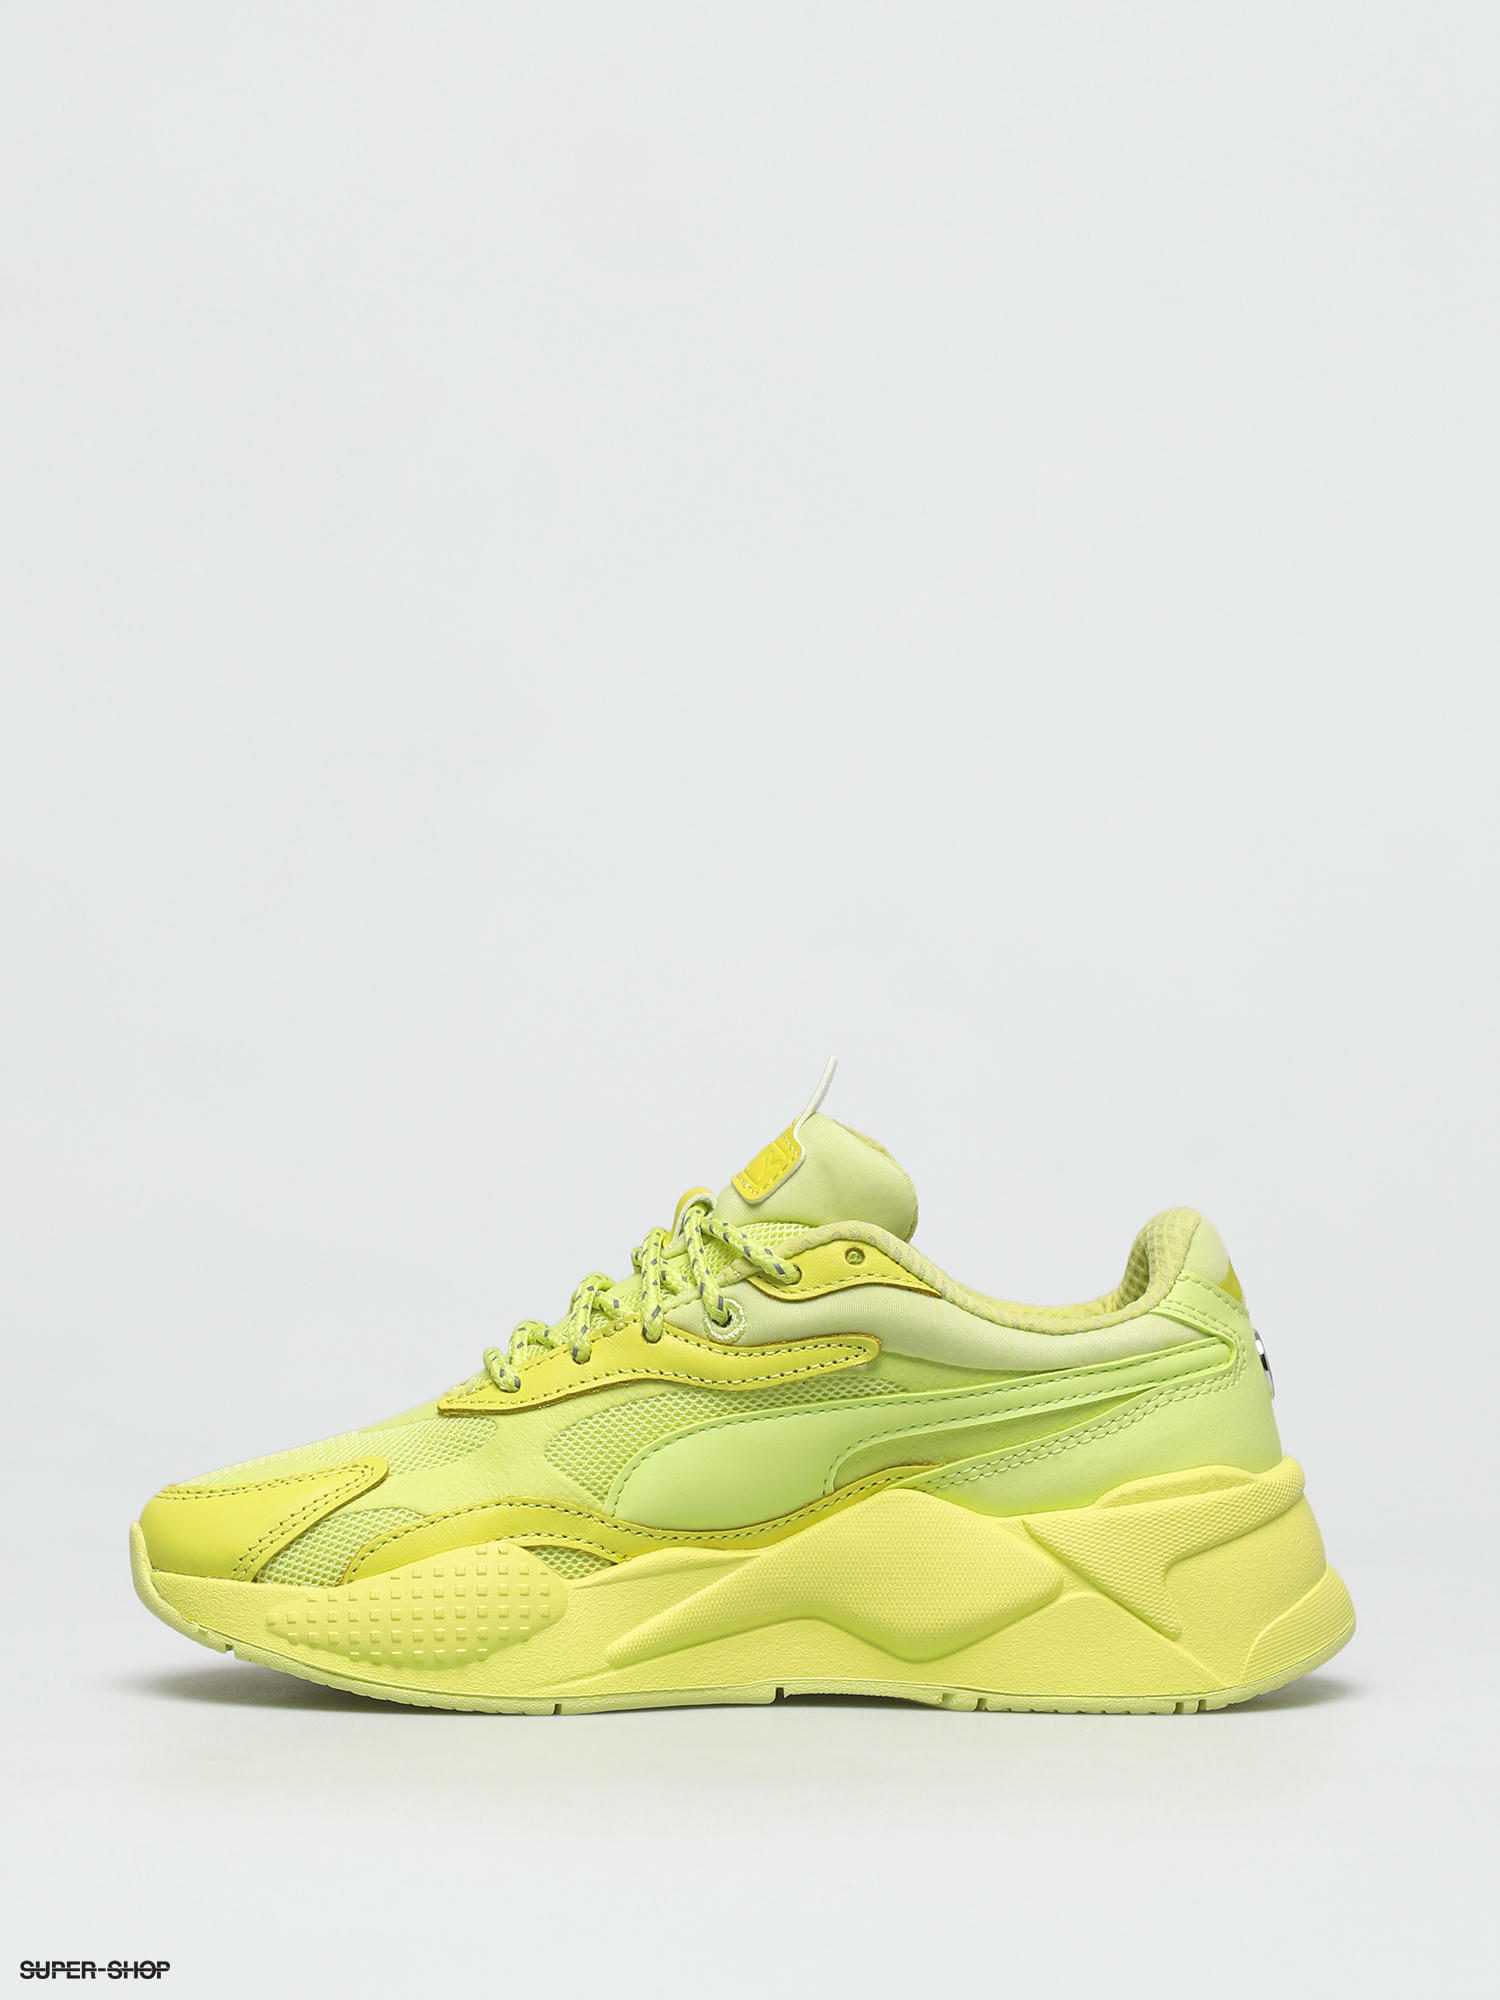 lime green puma sneakers